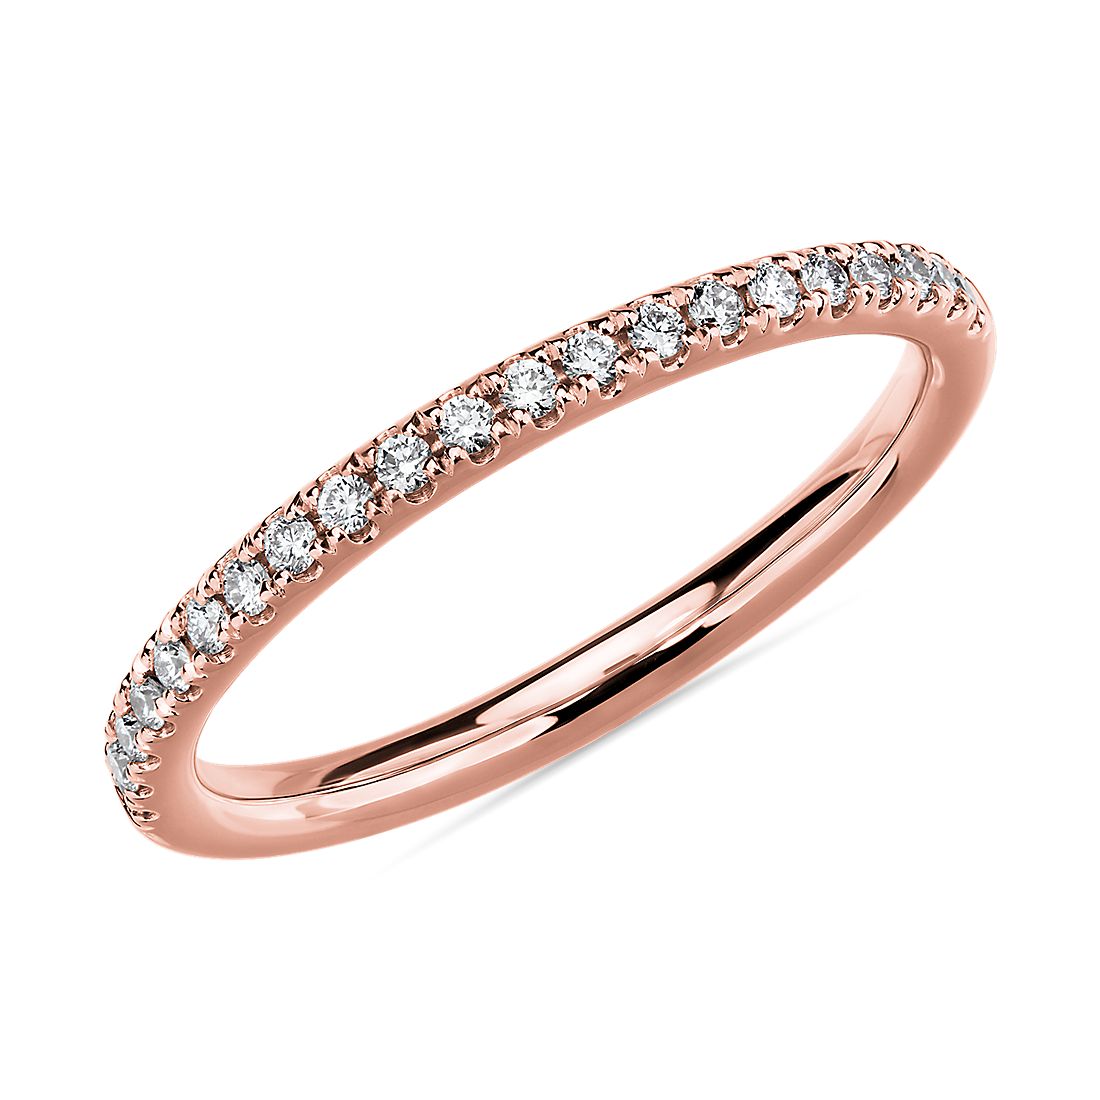 Riviera Pavé Diamond Ring in 14k Rose Gold (0.15 ct. tw.)